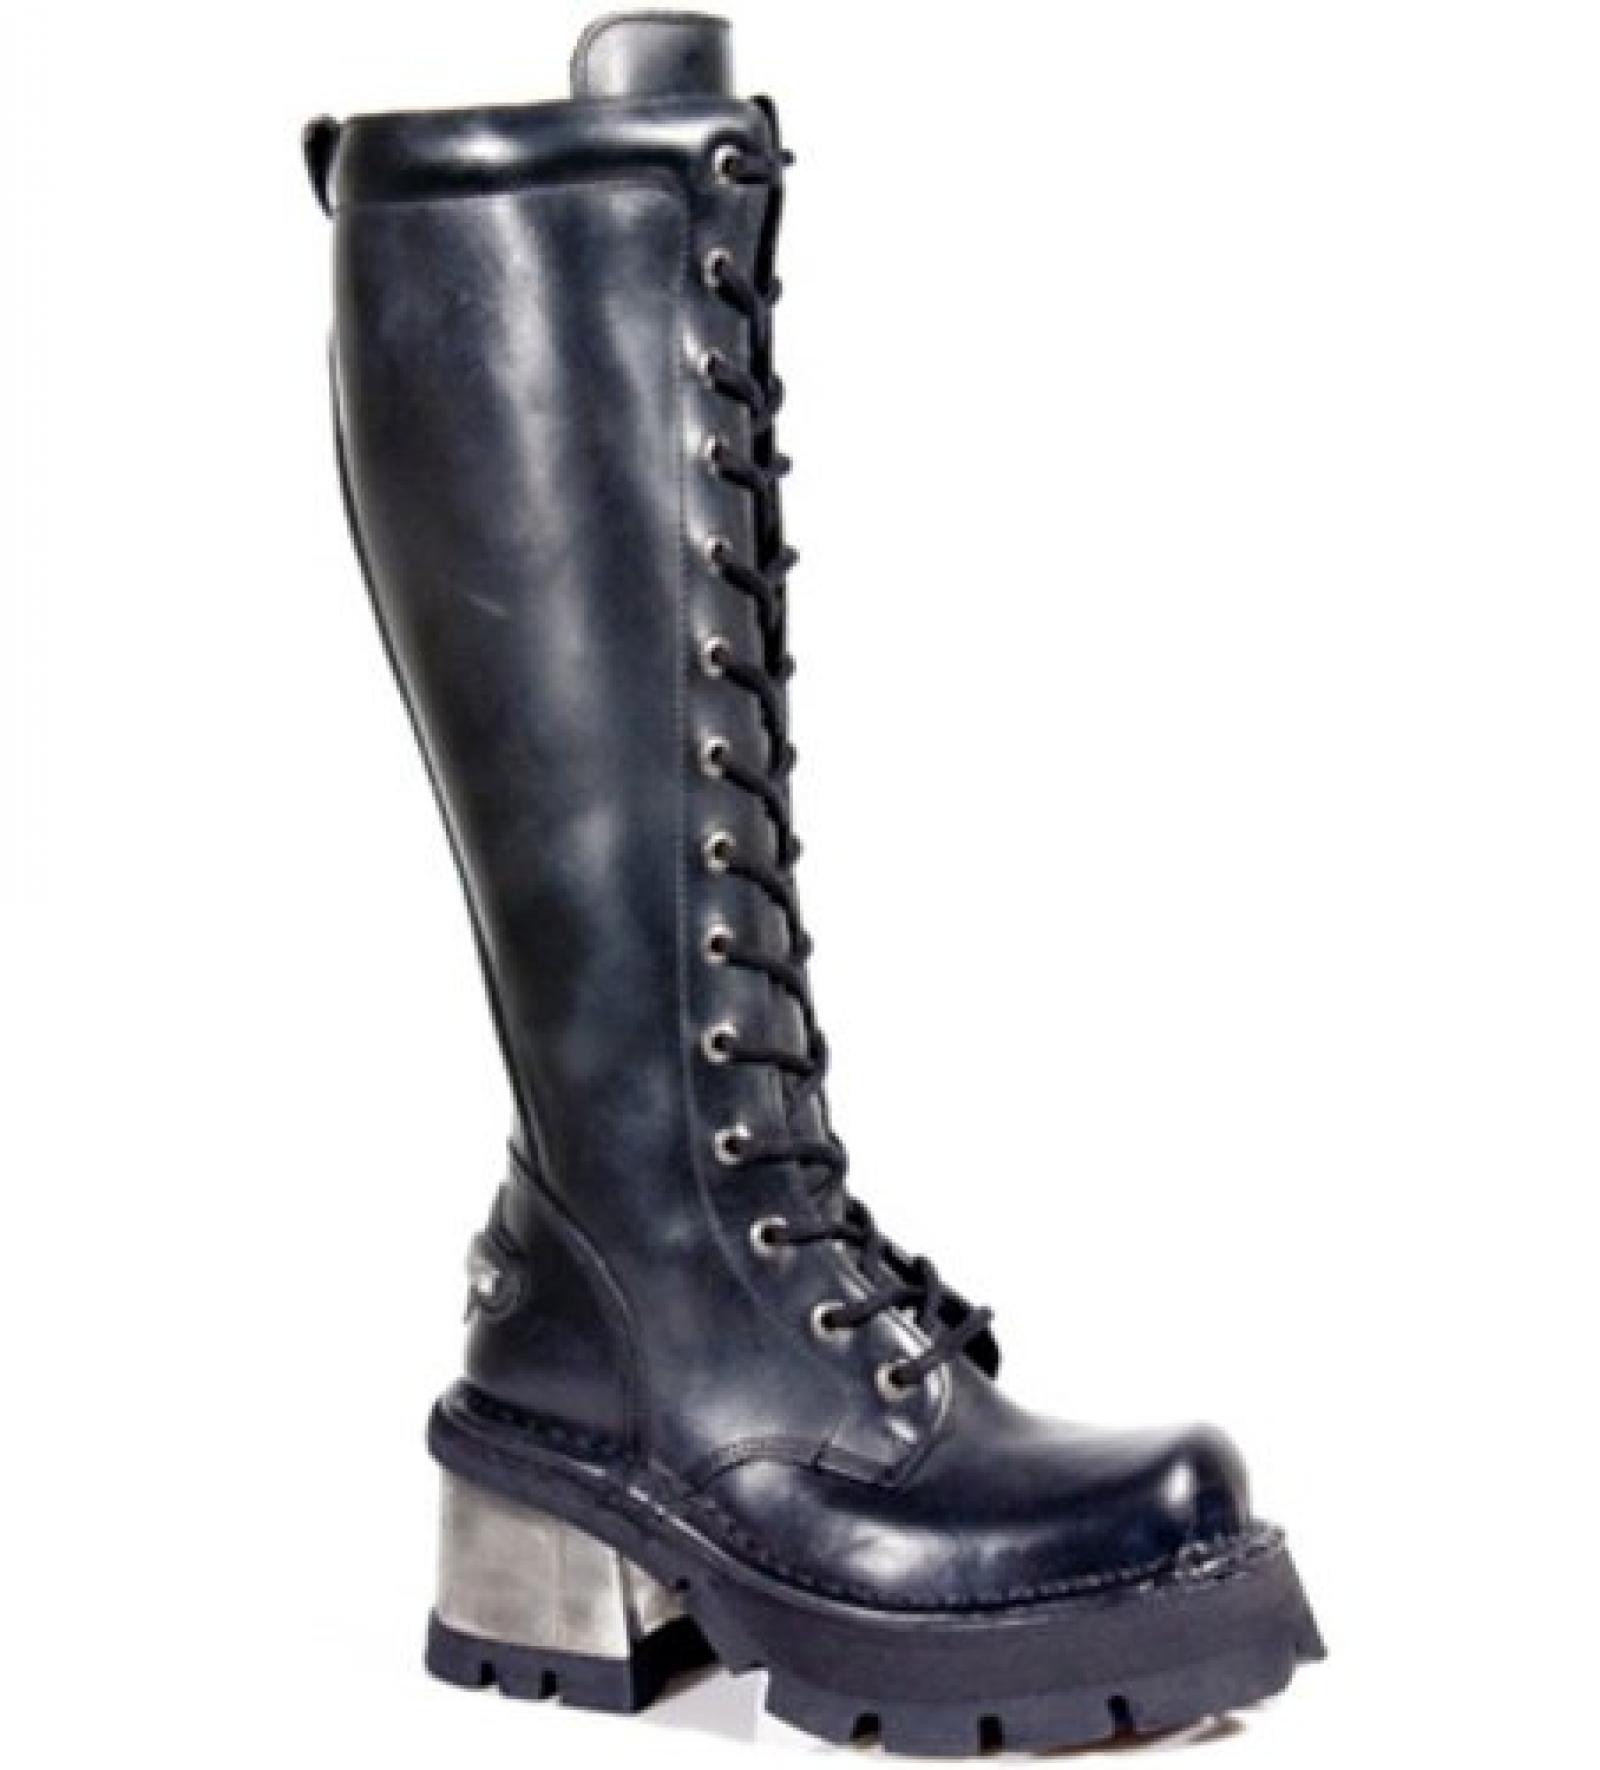 New Rock Boots Damen Stiefel - Style 236 S1 schwarz 